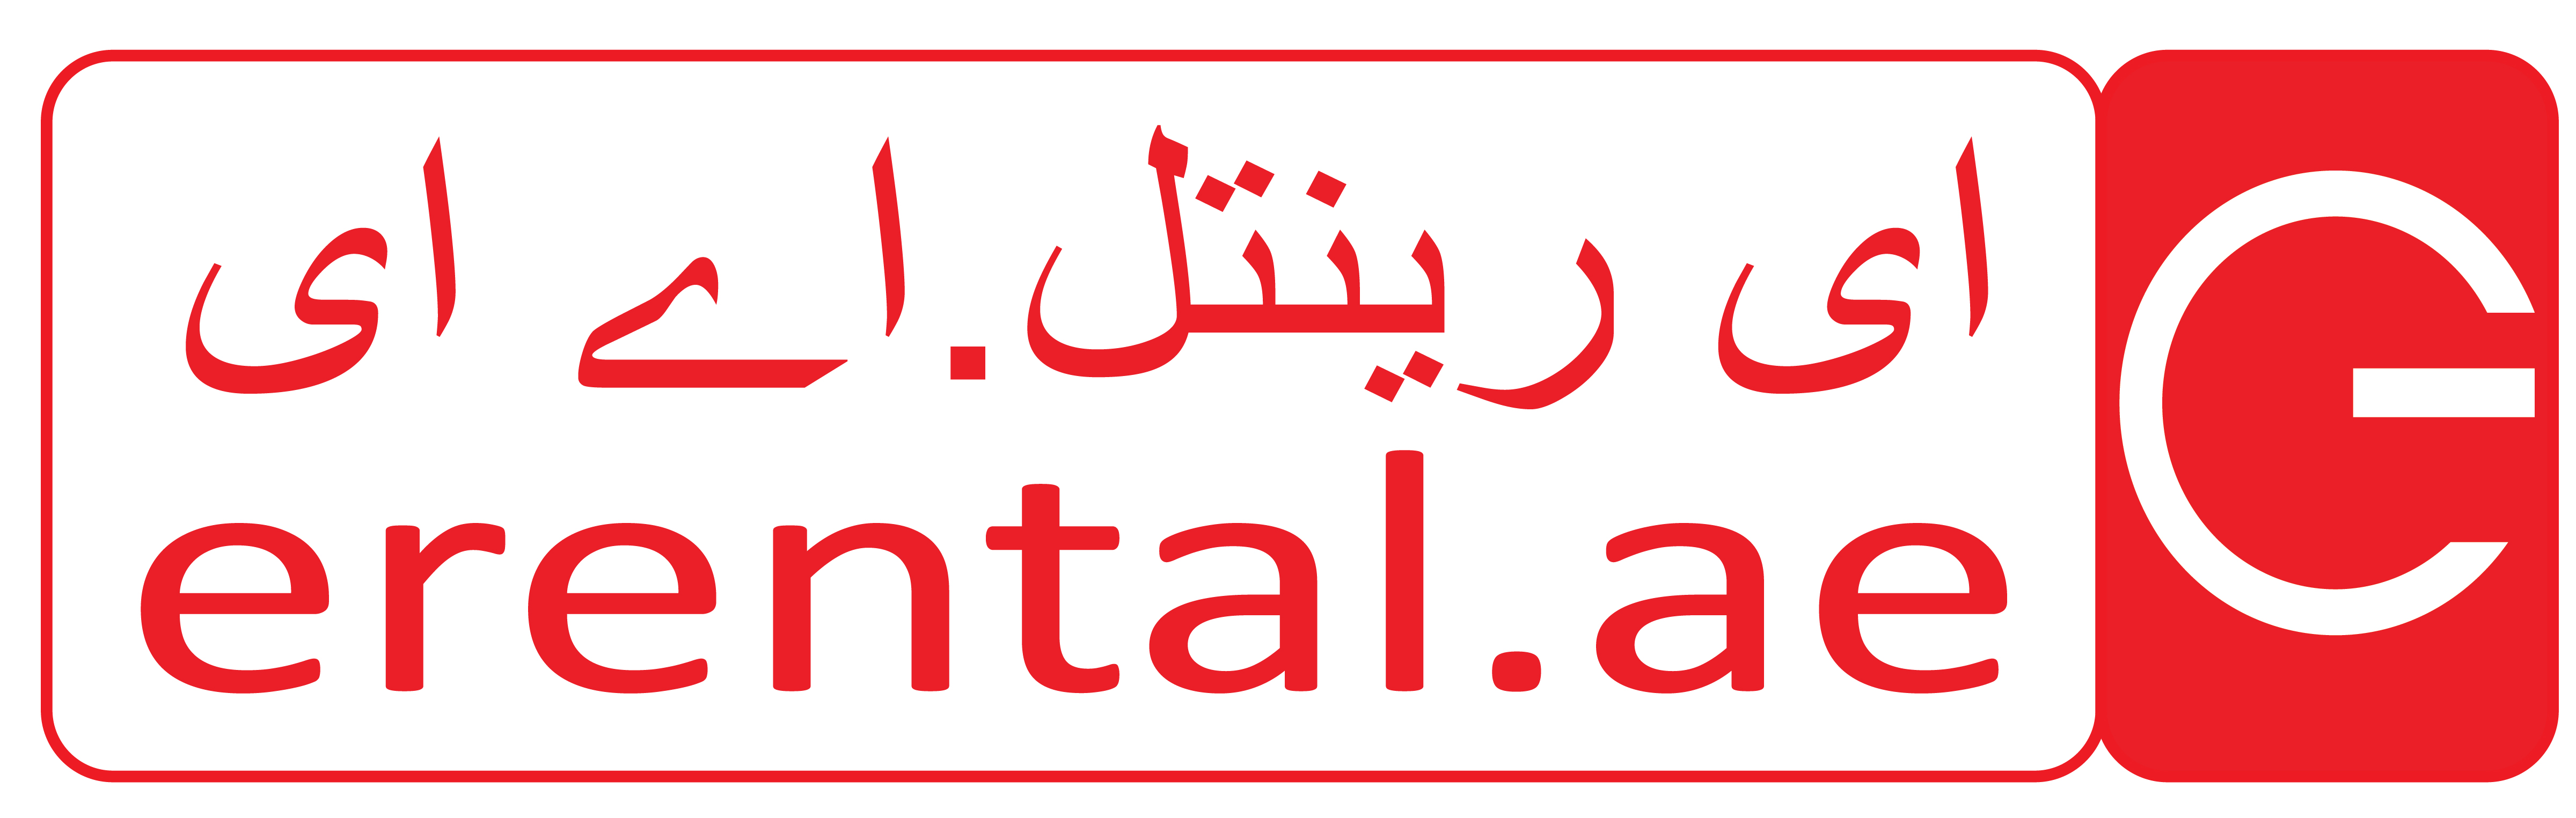 Erental Logo-01